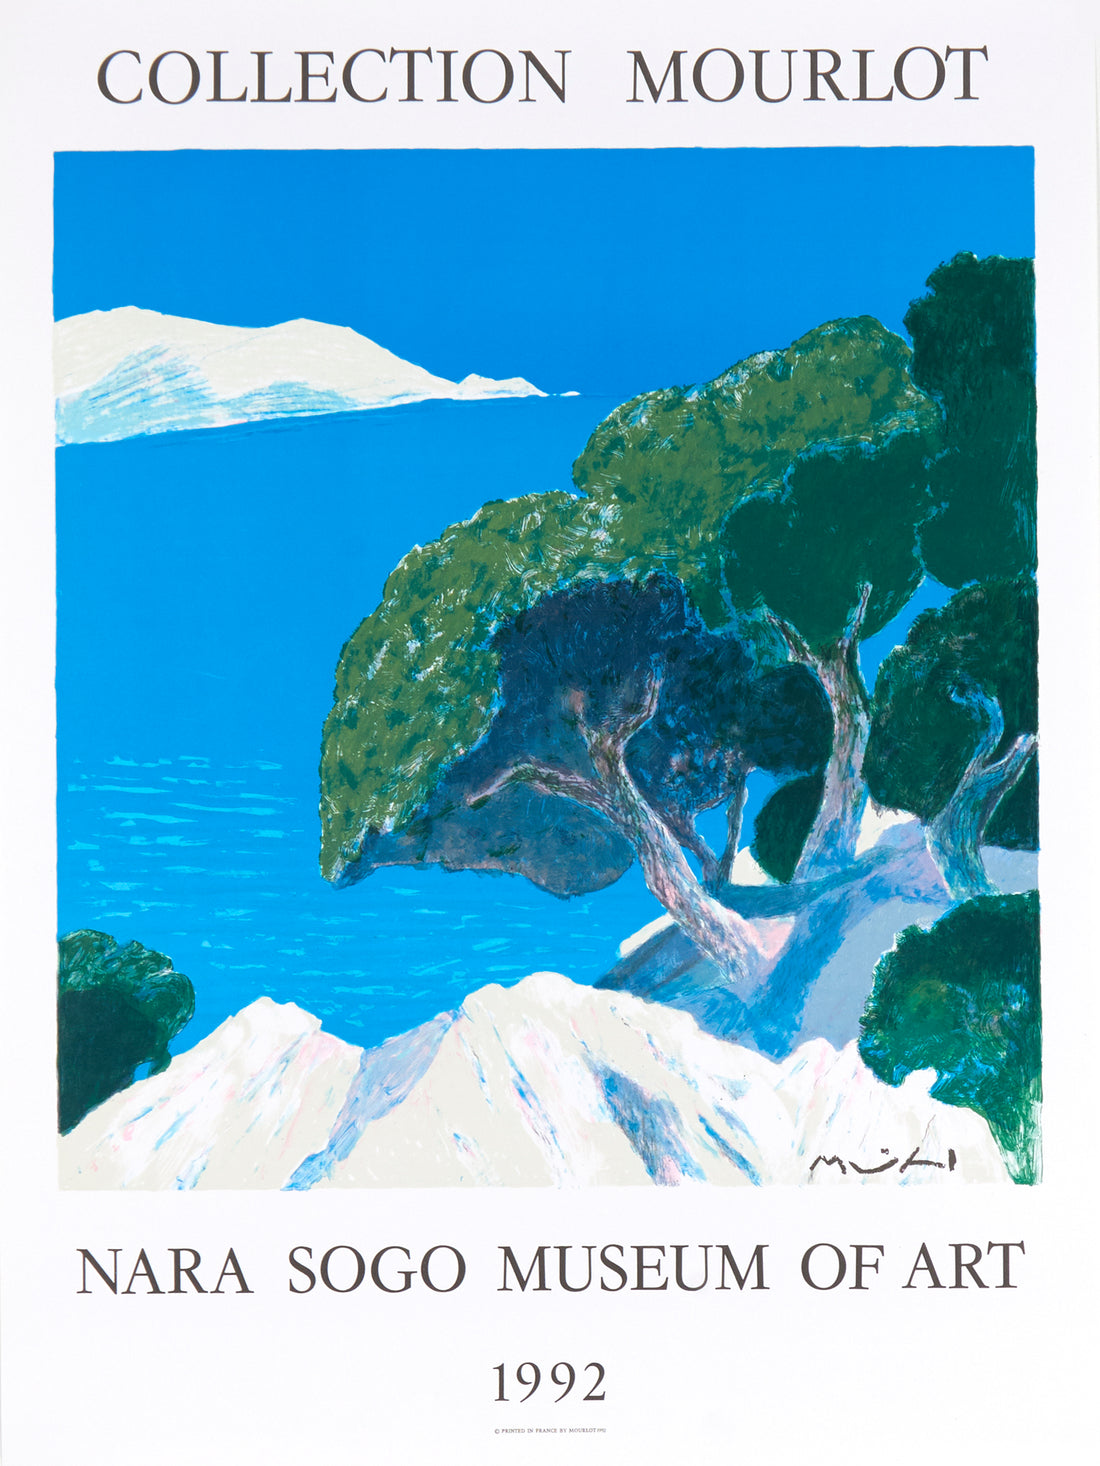 Nara Sogo Museum of Art, Mourlot posters, beach art, summer art, Roger Muhl 